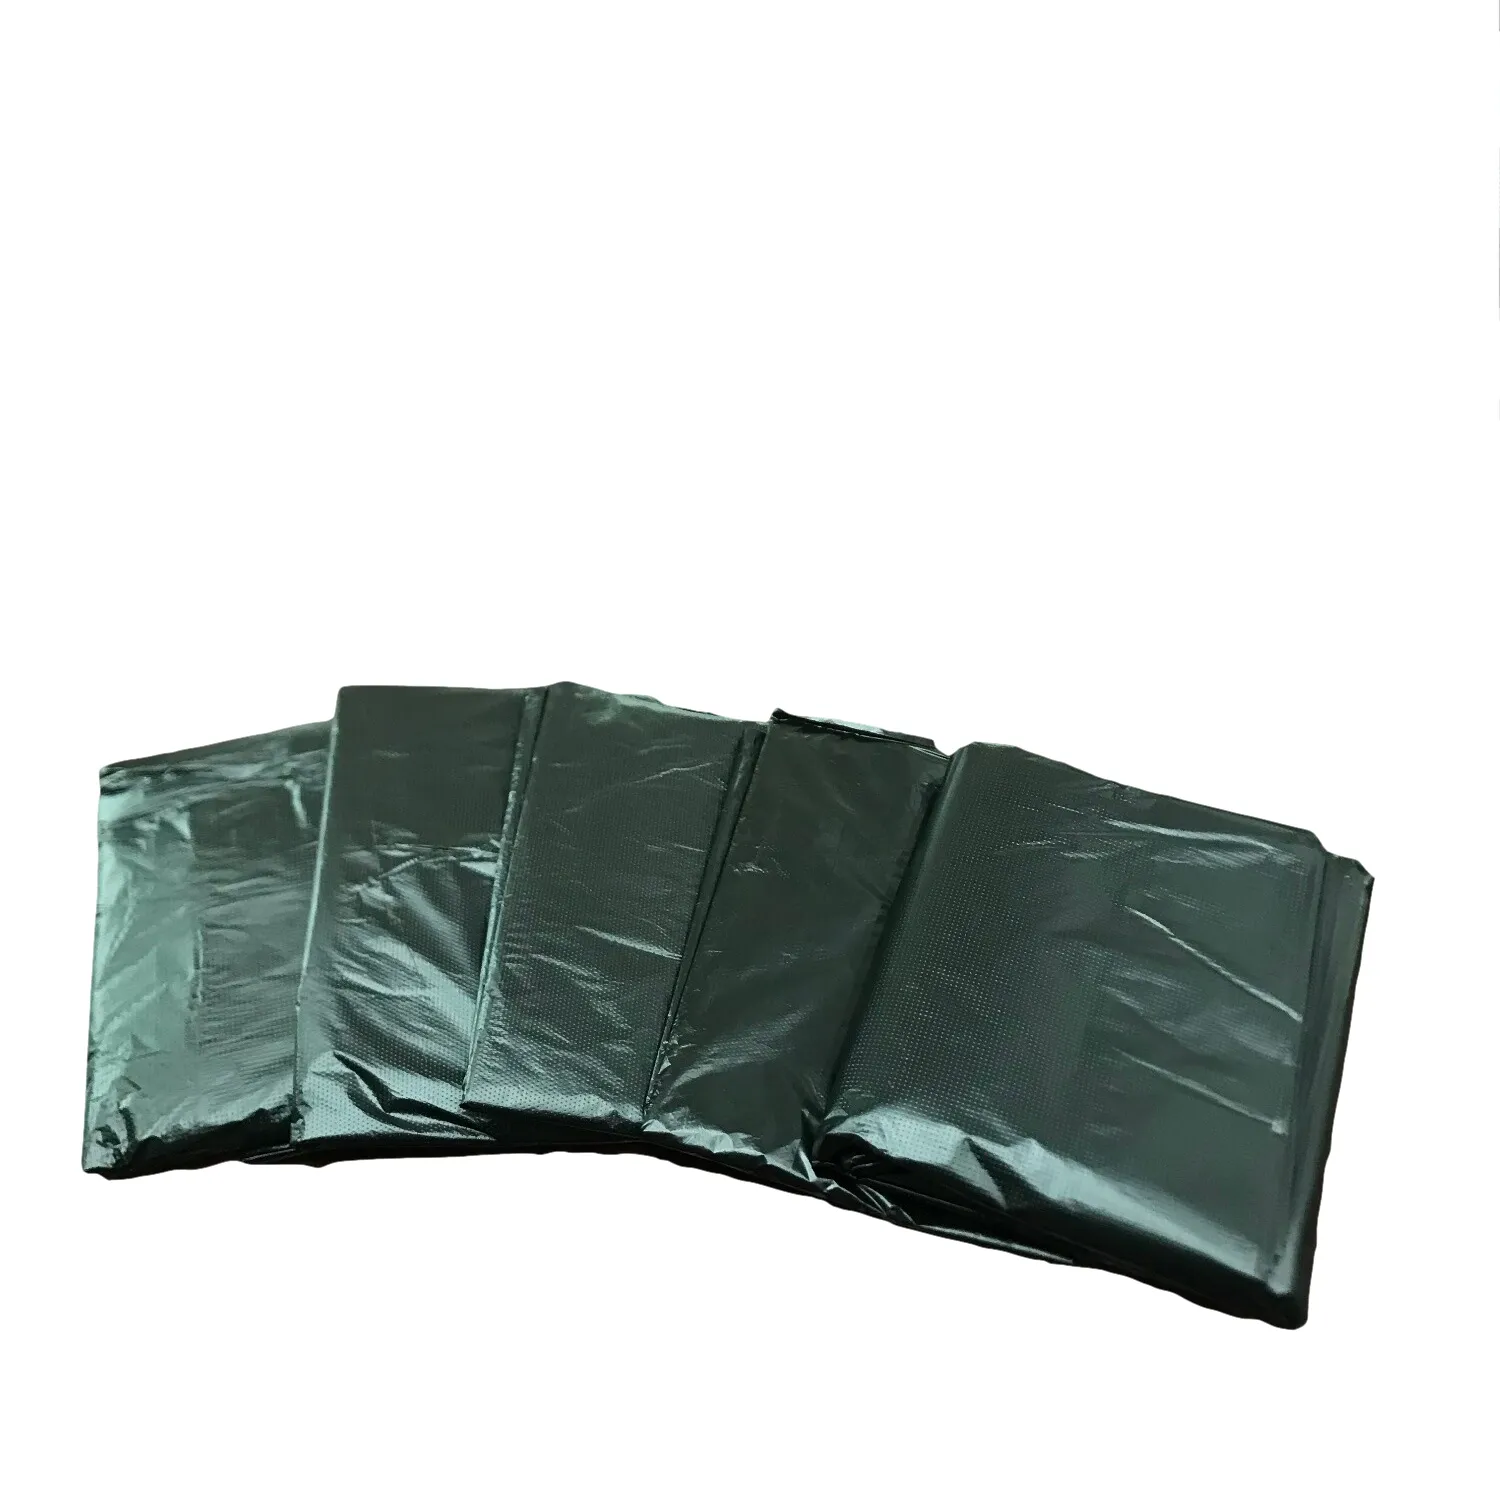 थोक कचरा प्लास्टिक बैग, स्टार सील मजबूत सीलिंग लीकप्रूफ घरेलू काले कचरा बैग ठेकेदार कचरा बिन लाइनर